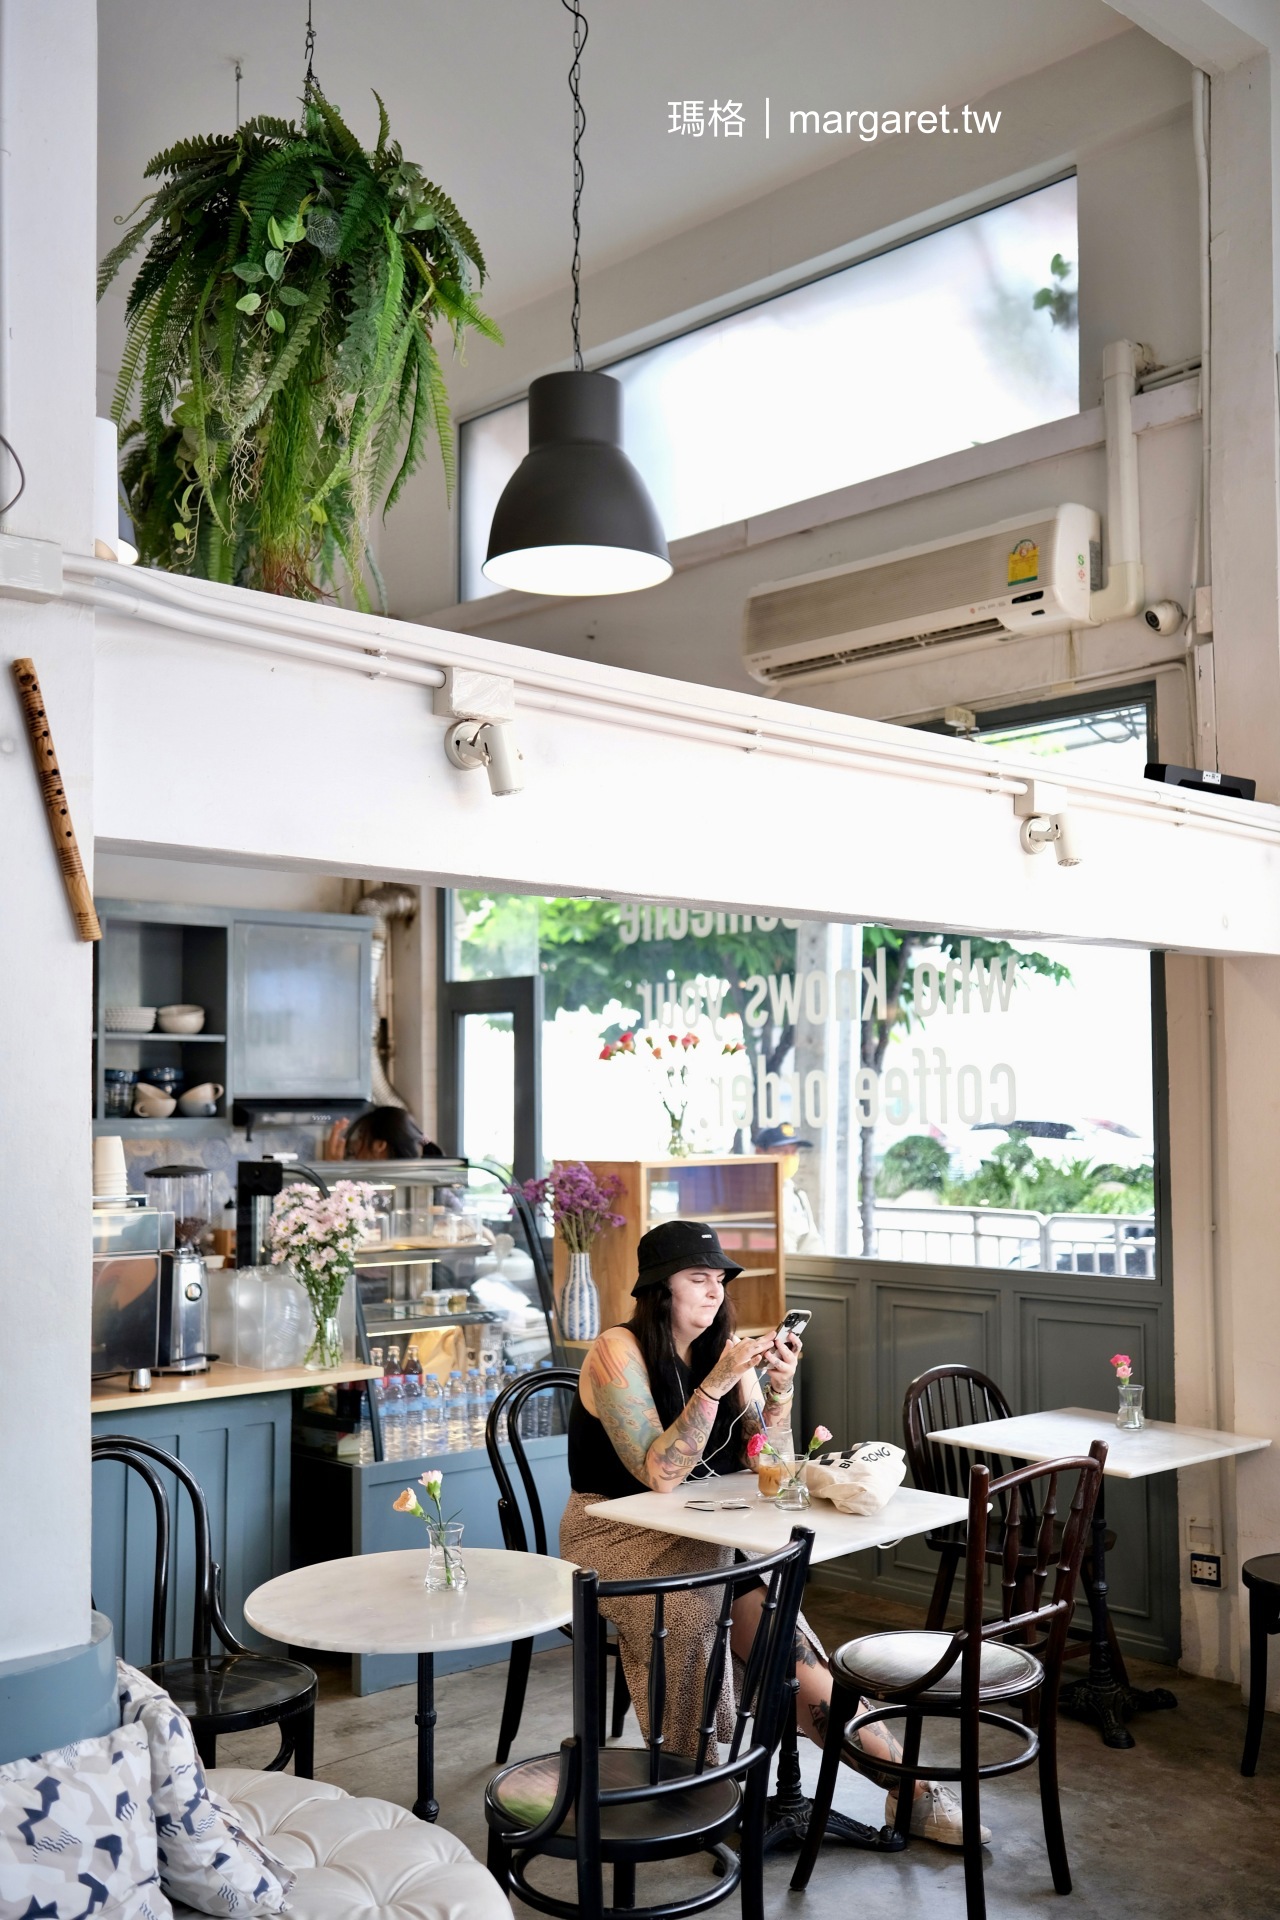 The Quarter Bangkok。曼谷高級青旅 / 分享空間 / 咖啡｜什麼是Poshtel？